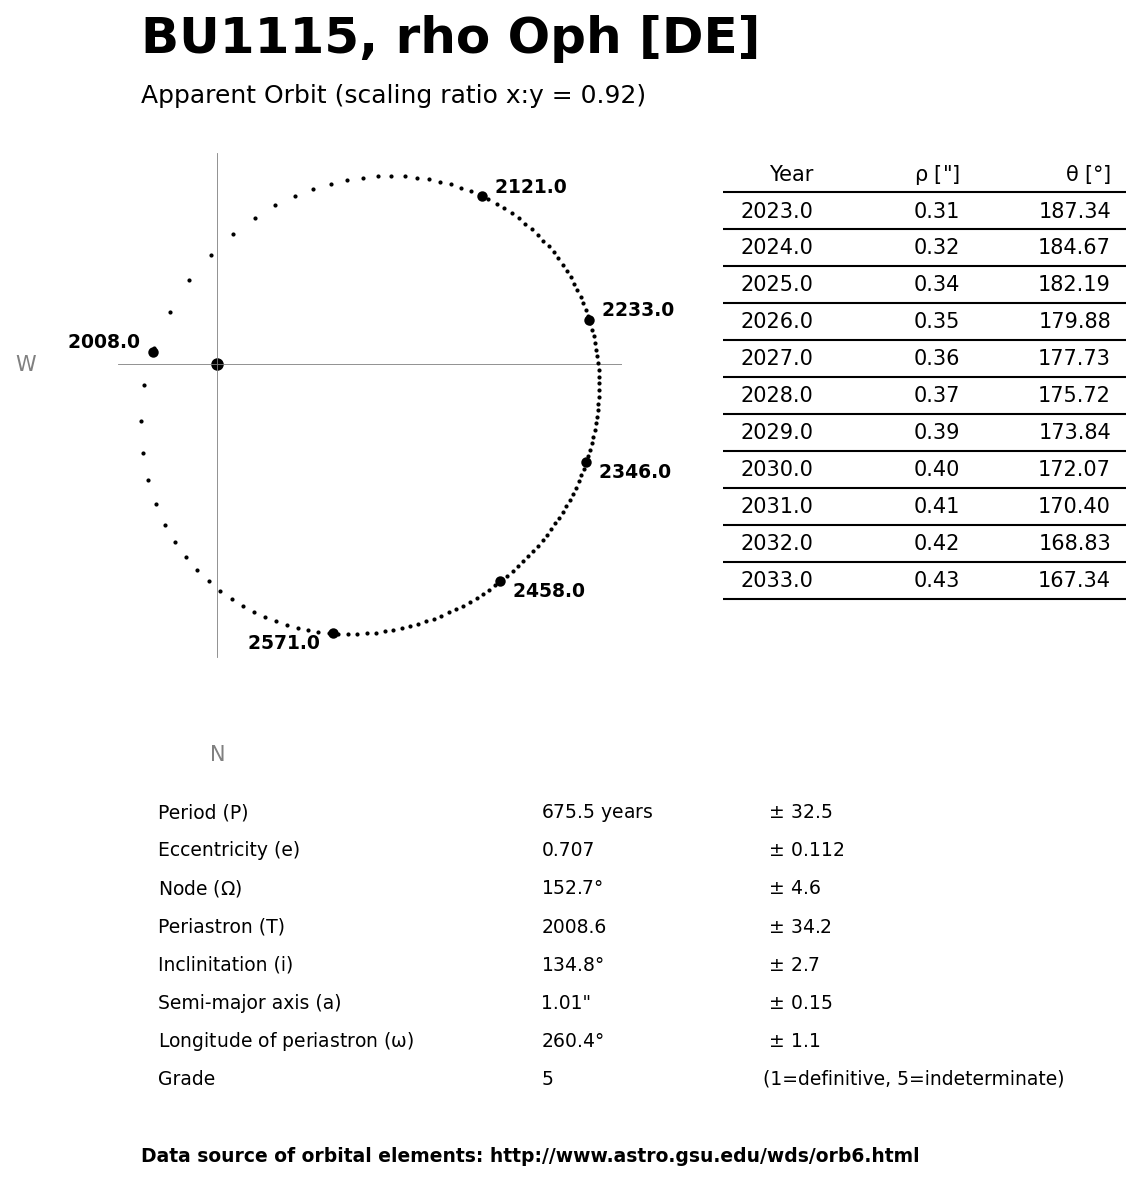 ../images/binary-star-orbits/BU1115-DE-orbit.jpg